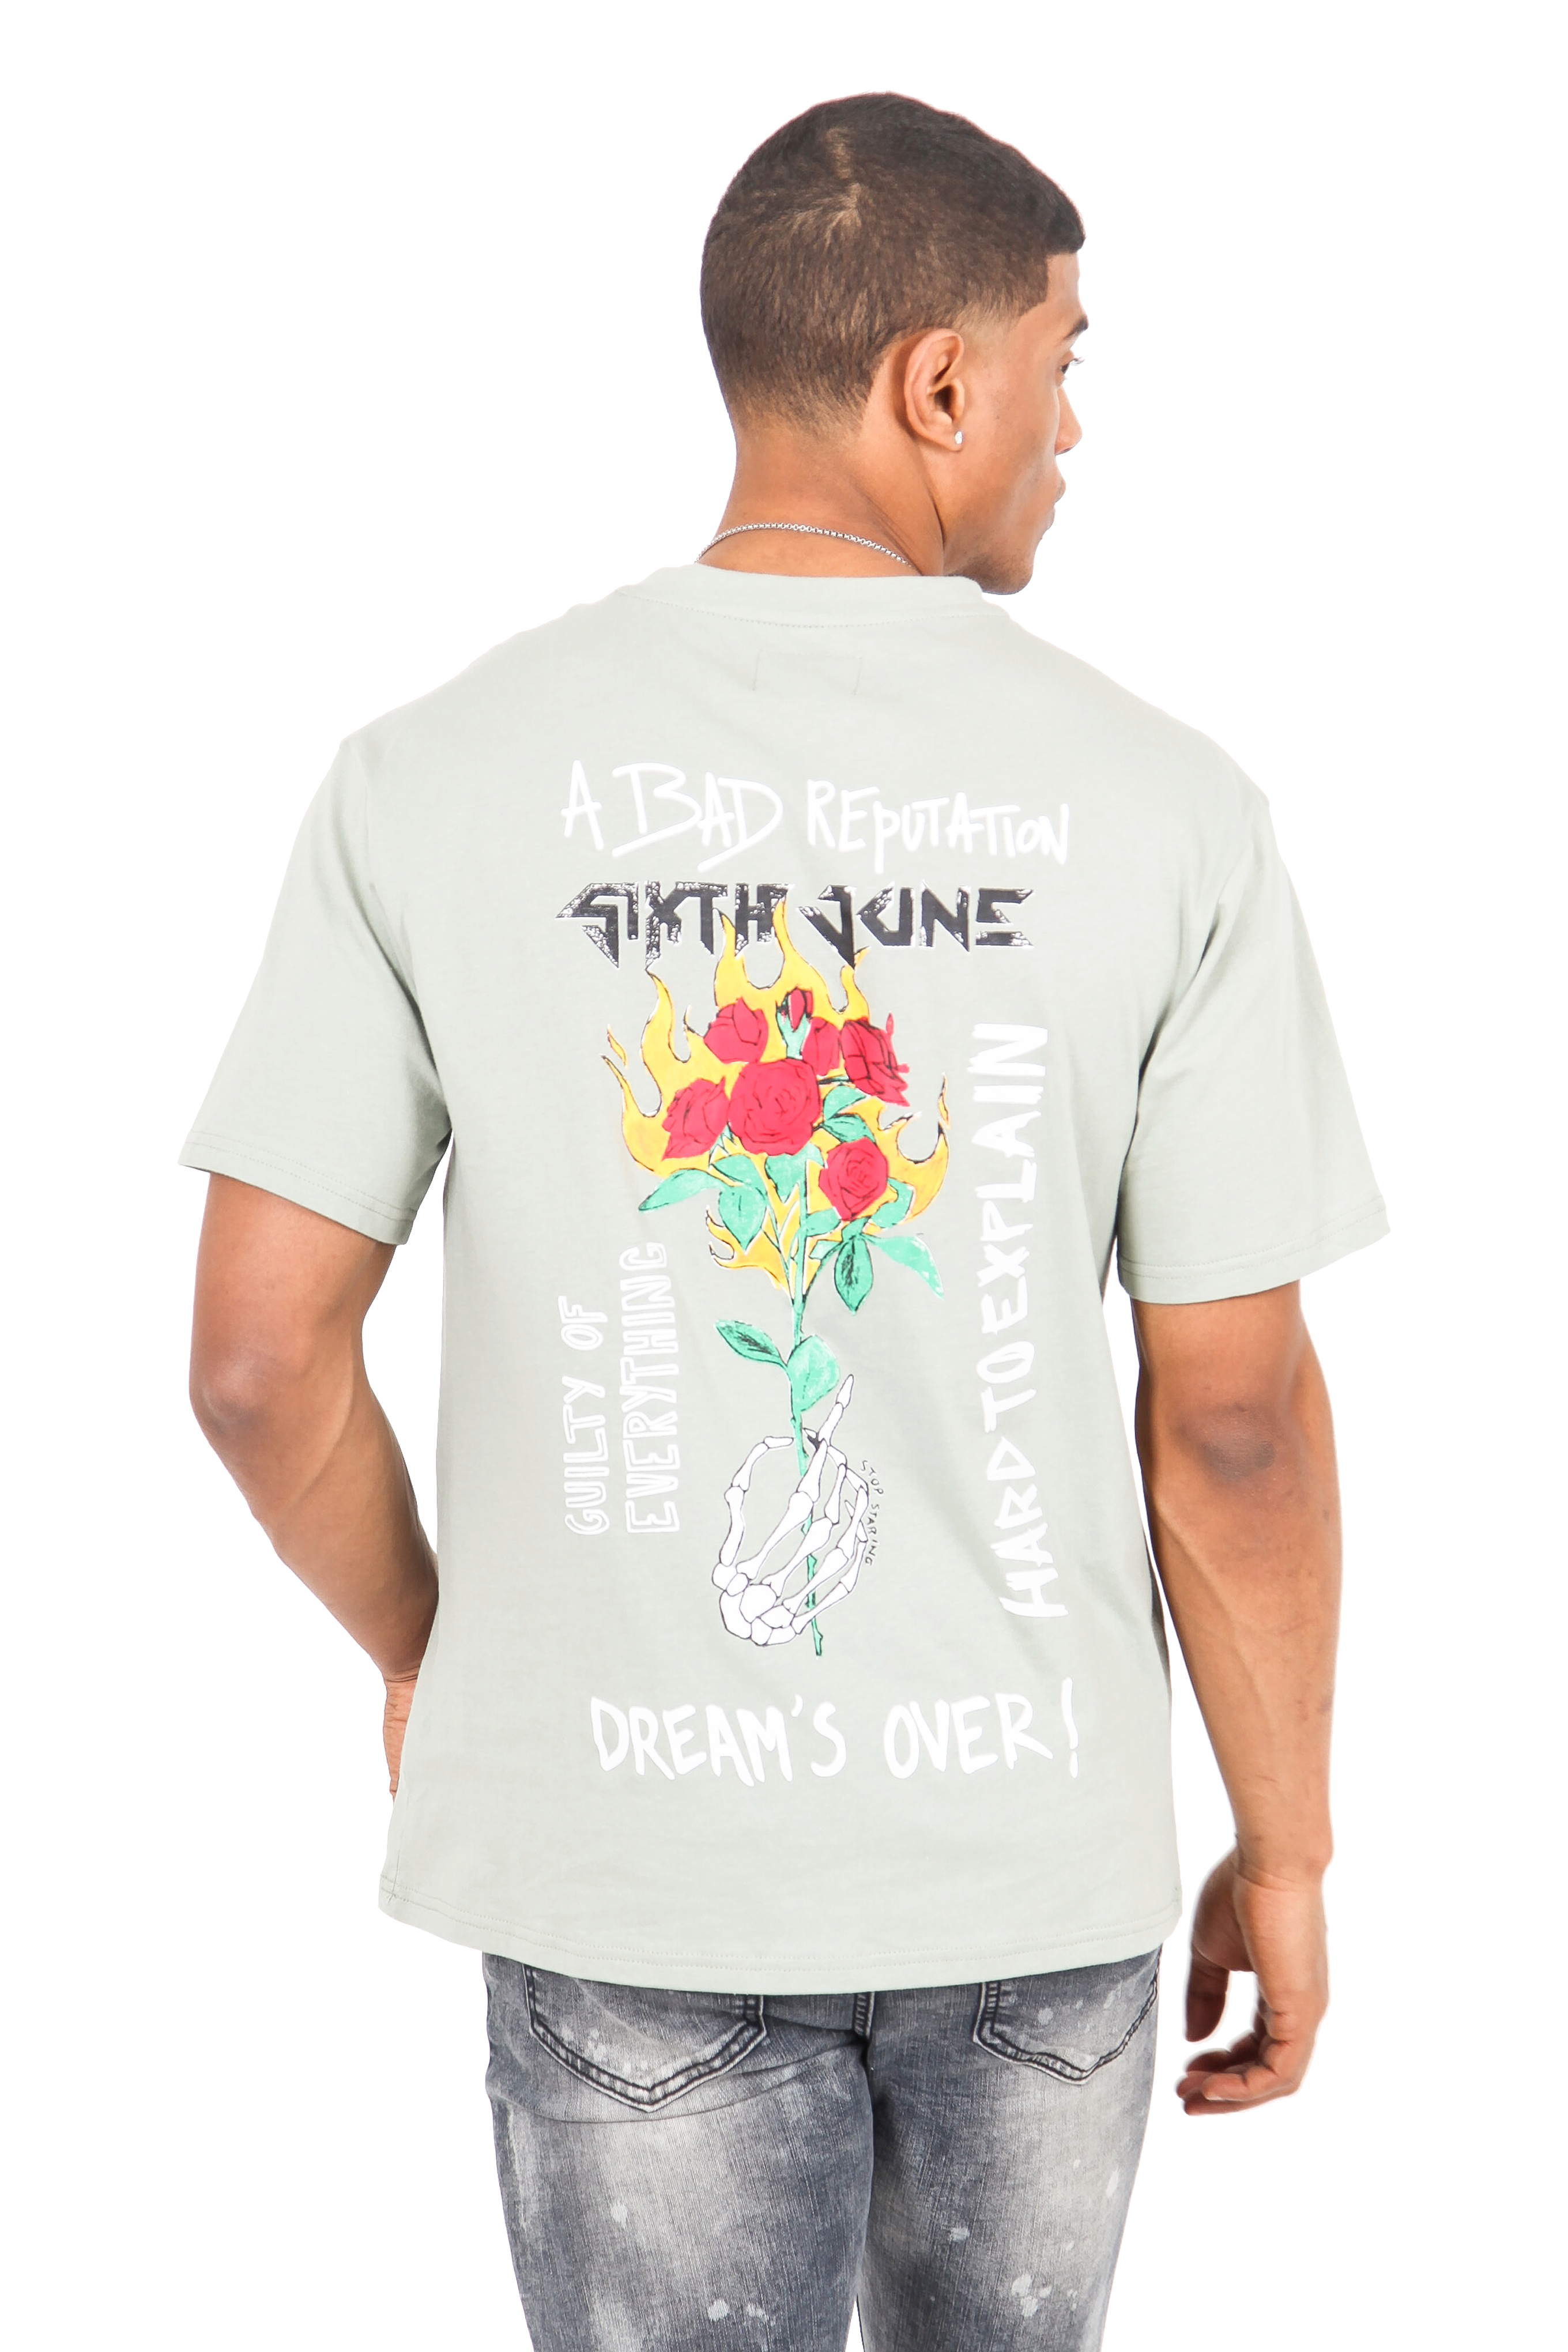 Sixth June - T-shirt "bad reputation" hard rock vert